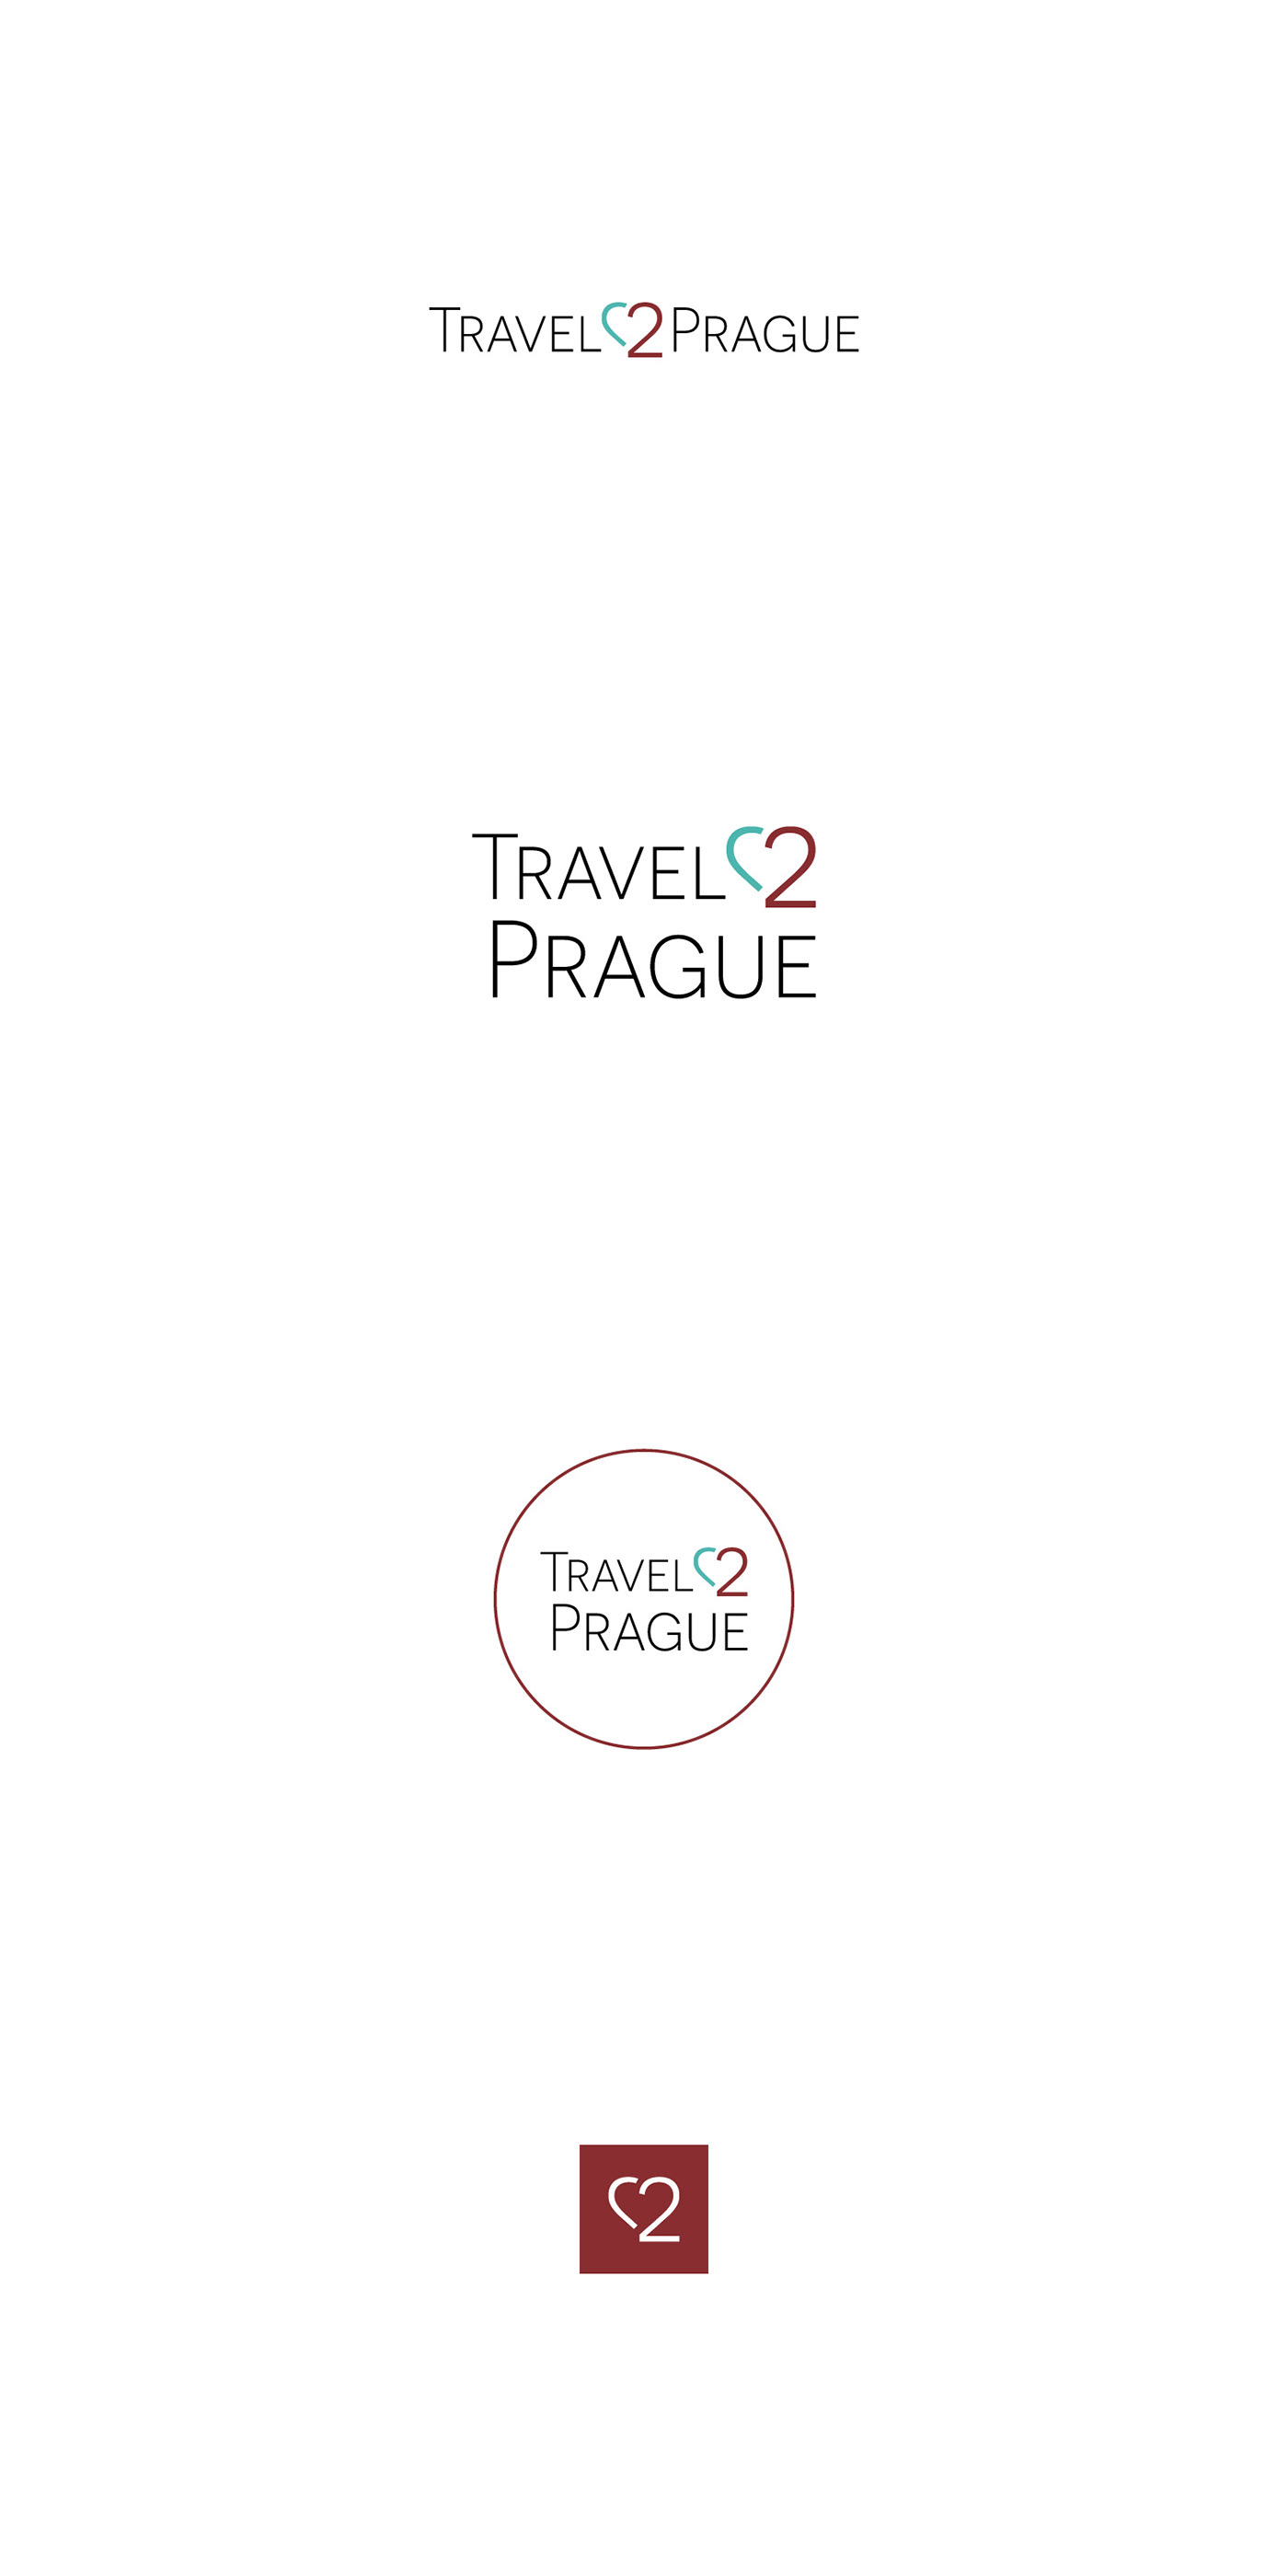 Travel prague company agency logo design Icon symbol heart Two